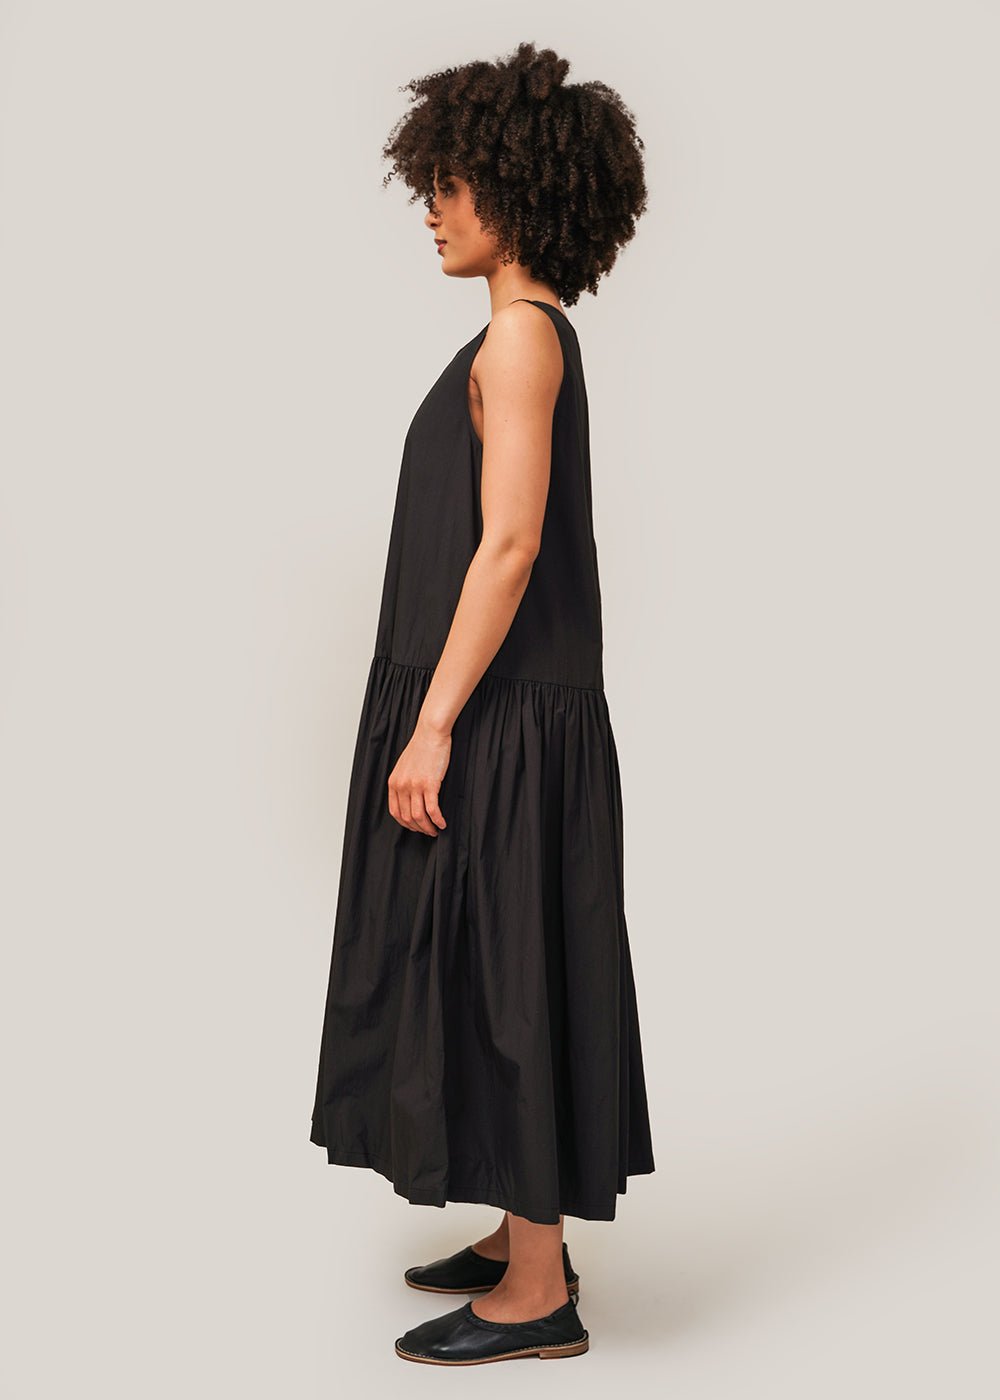 AMOMENTO Black Cotton Shirring Dress - New Classics Studios Sustainable Ethical Fashion Canada